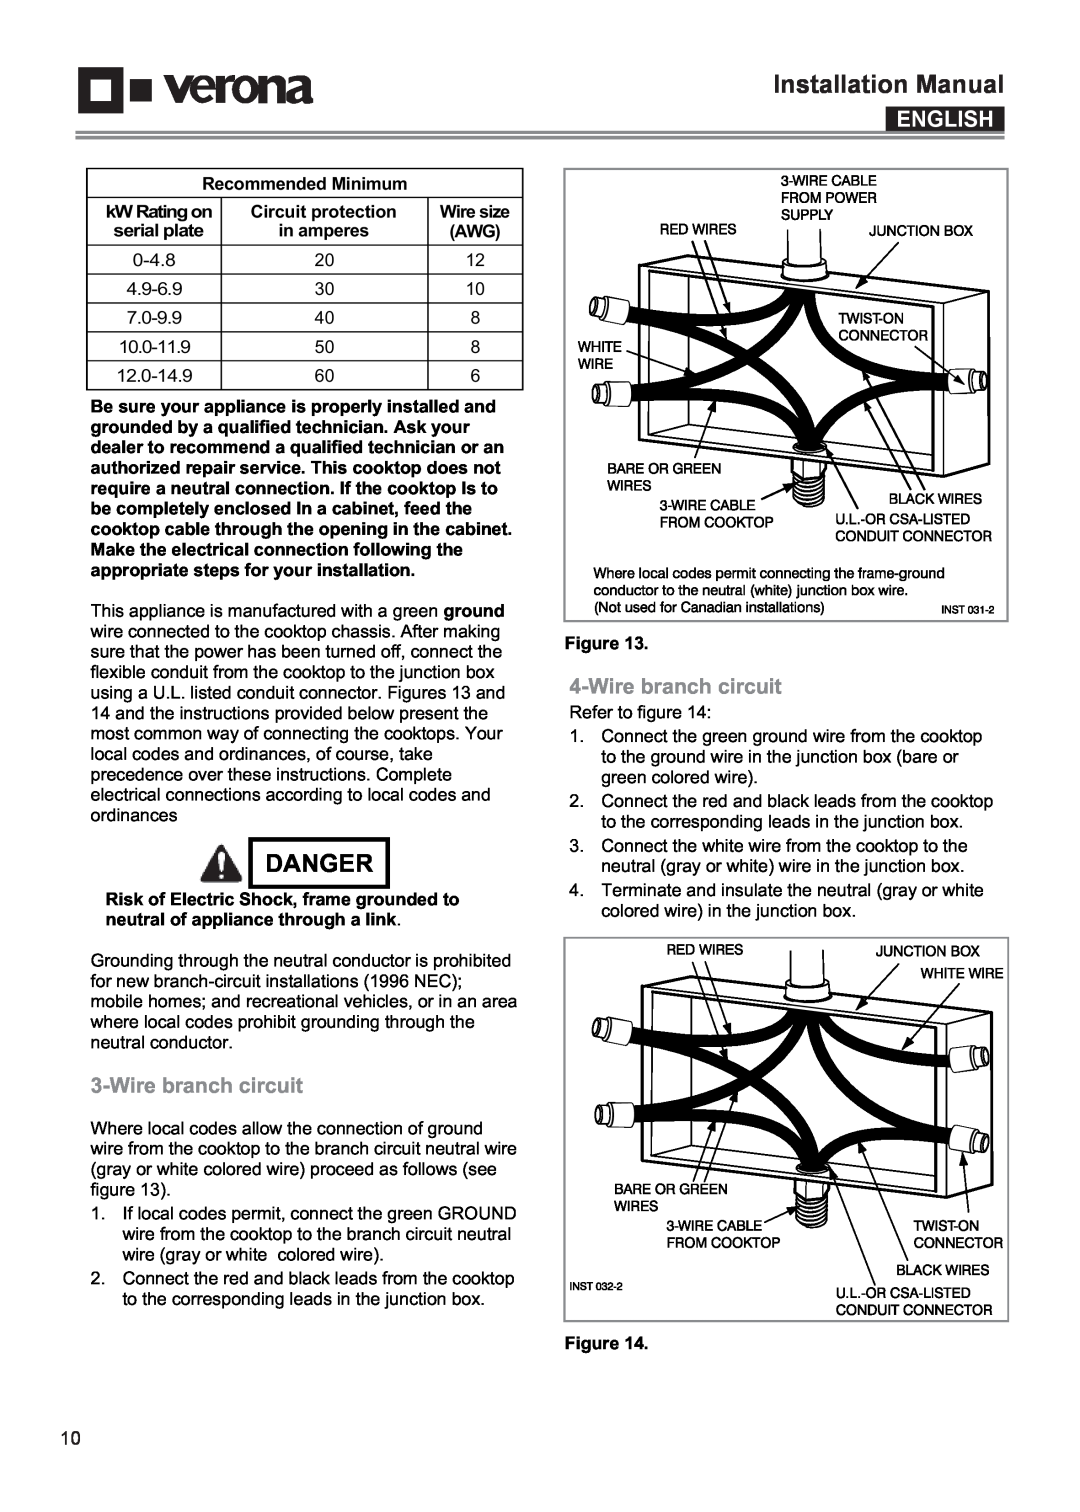 Verona VECTIM304, VECTIM365 manual Wirebranch circuit, Installation Manual, Danger, English, Recommended Minimum 